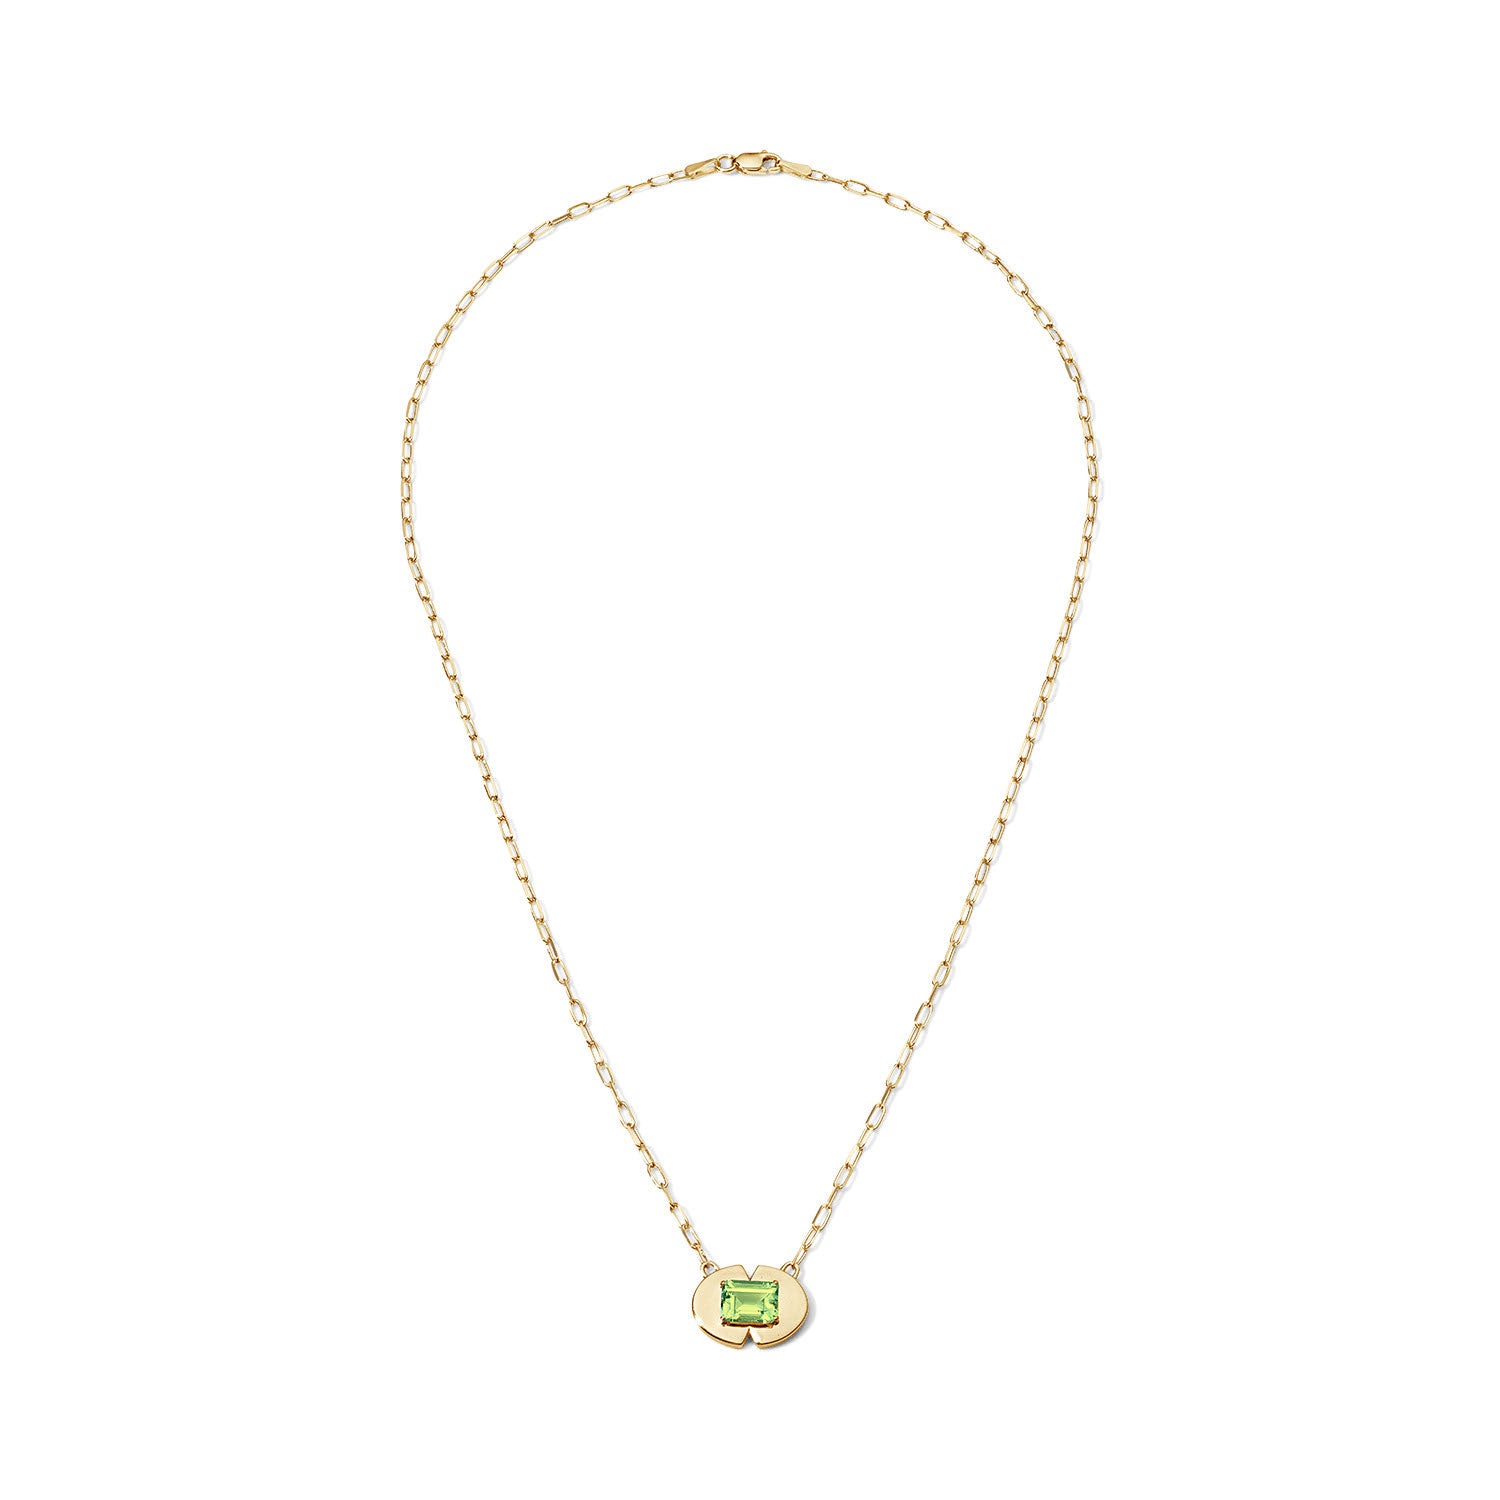 Emerald Cut Gemstone Necklace